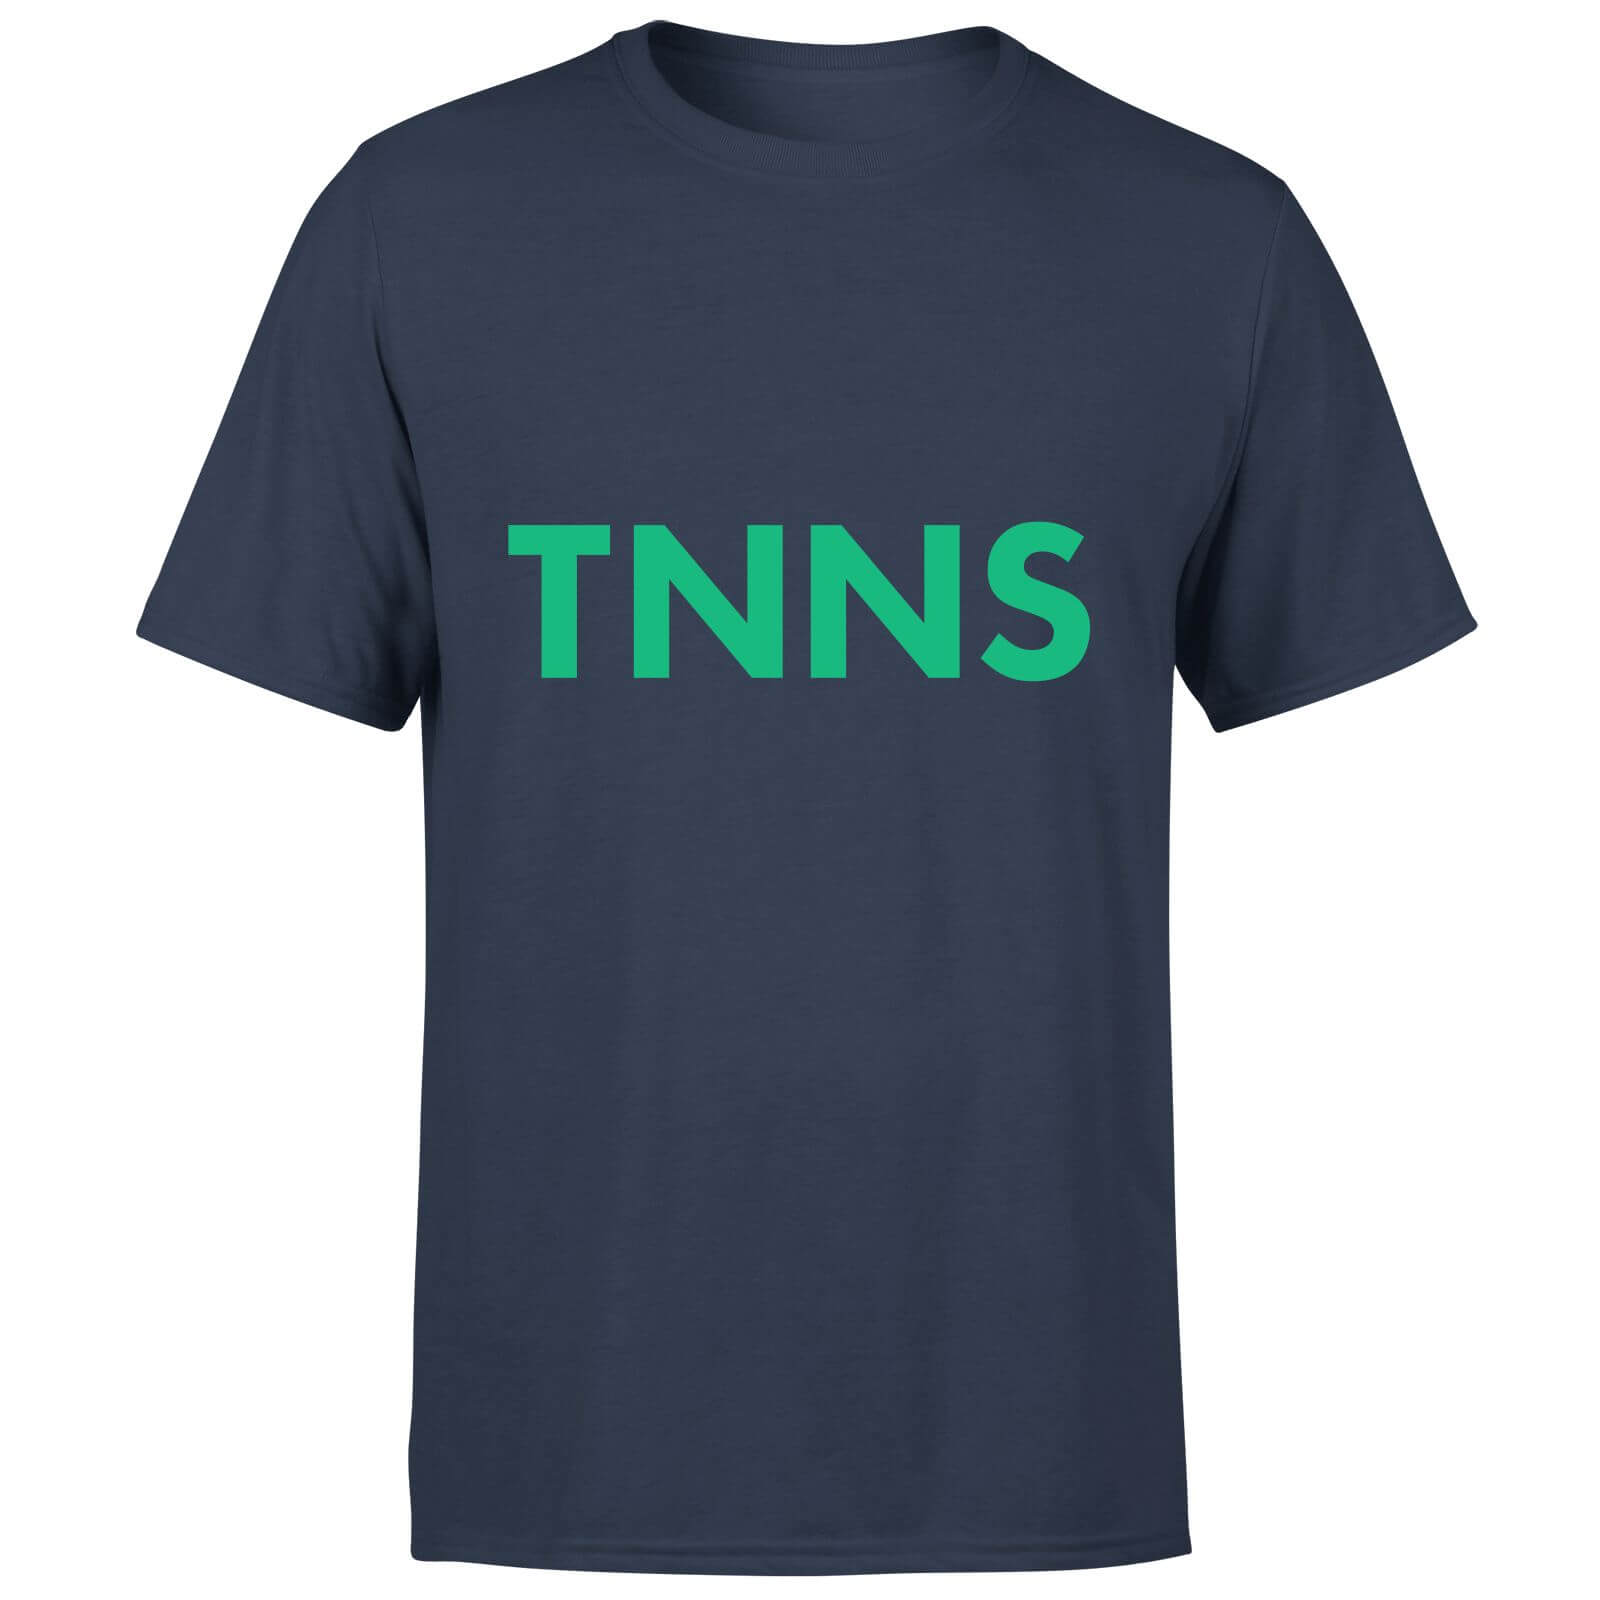 Tnns T-Shirt - Navy - S - Navy